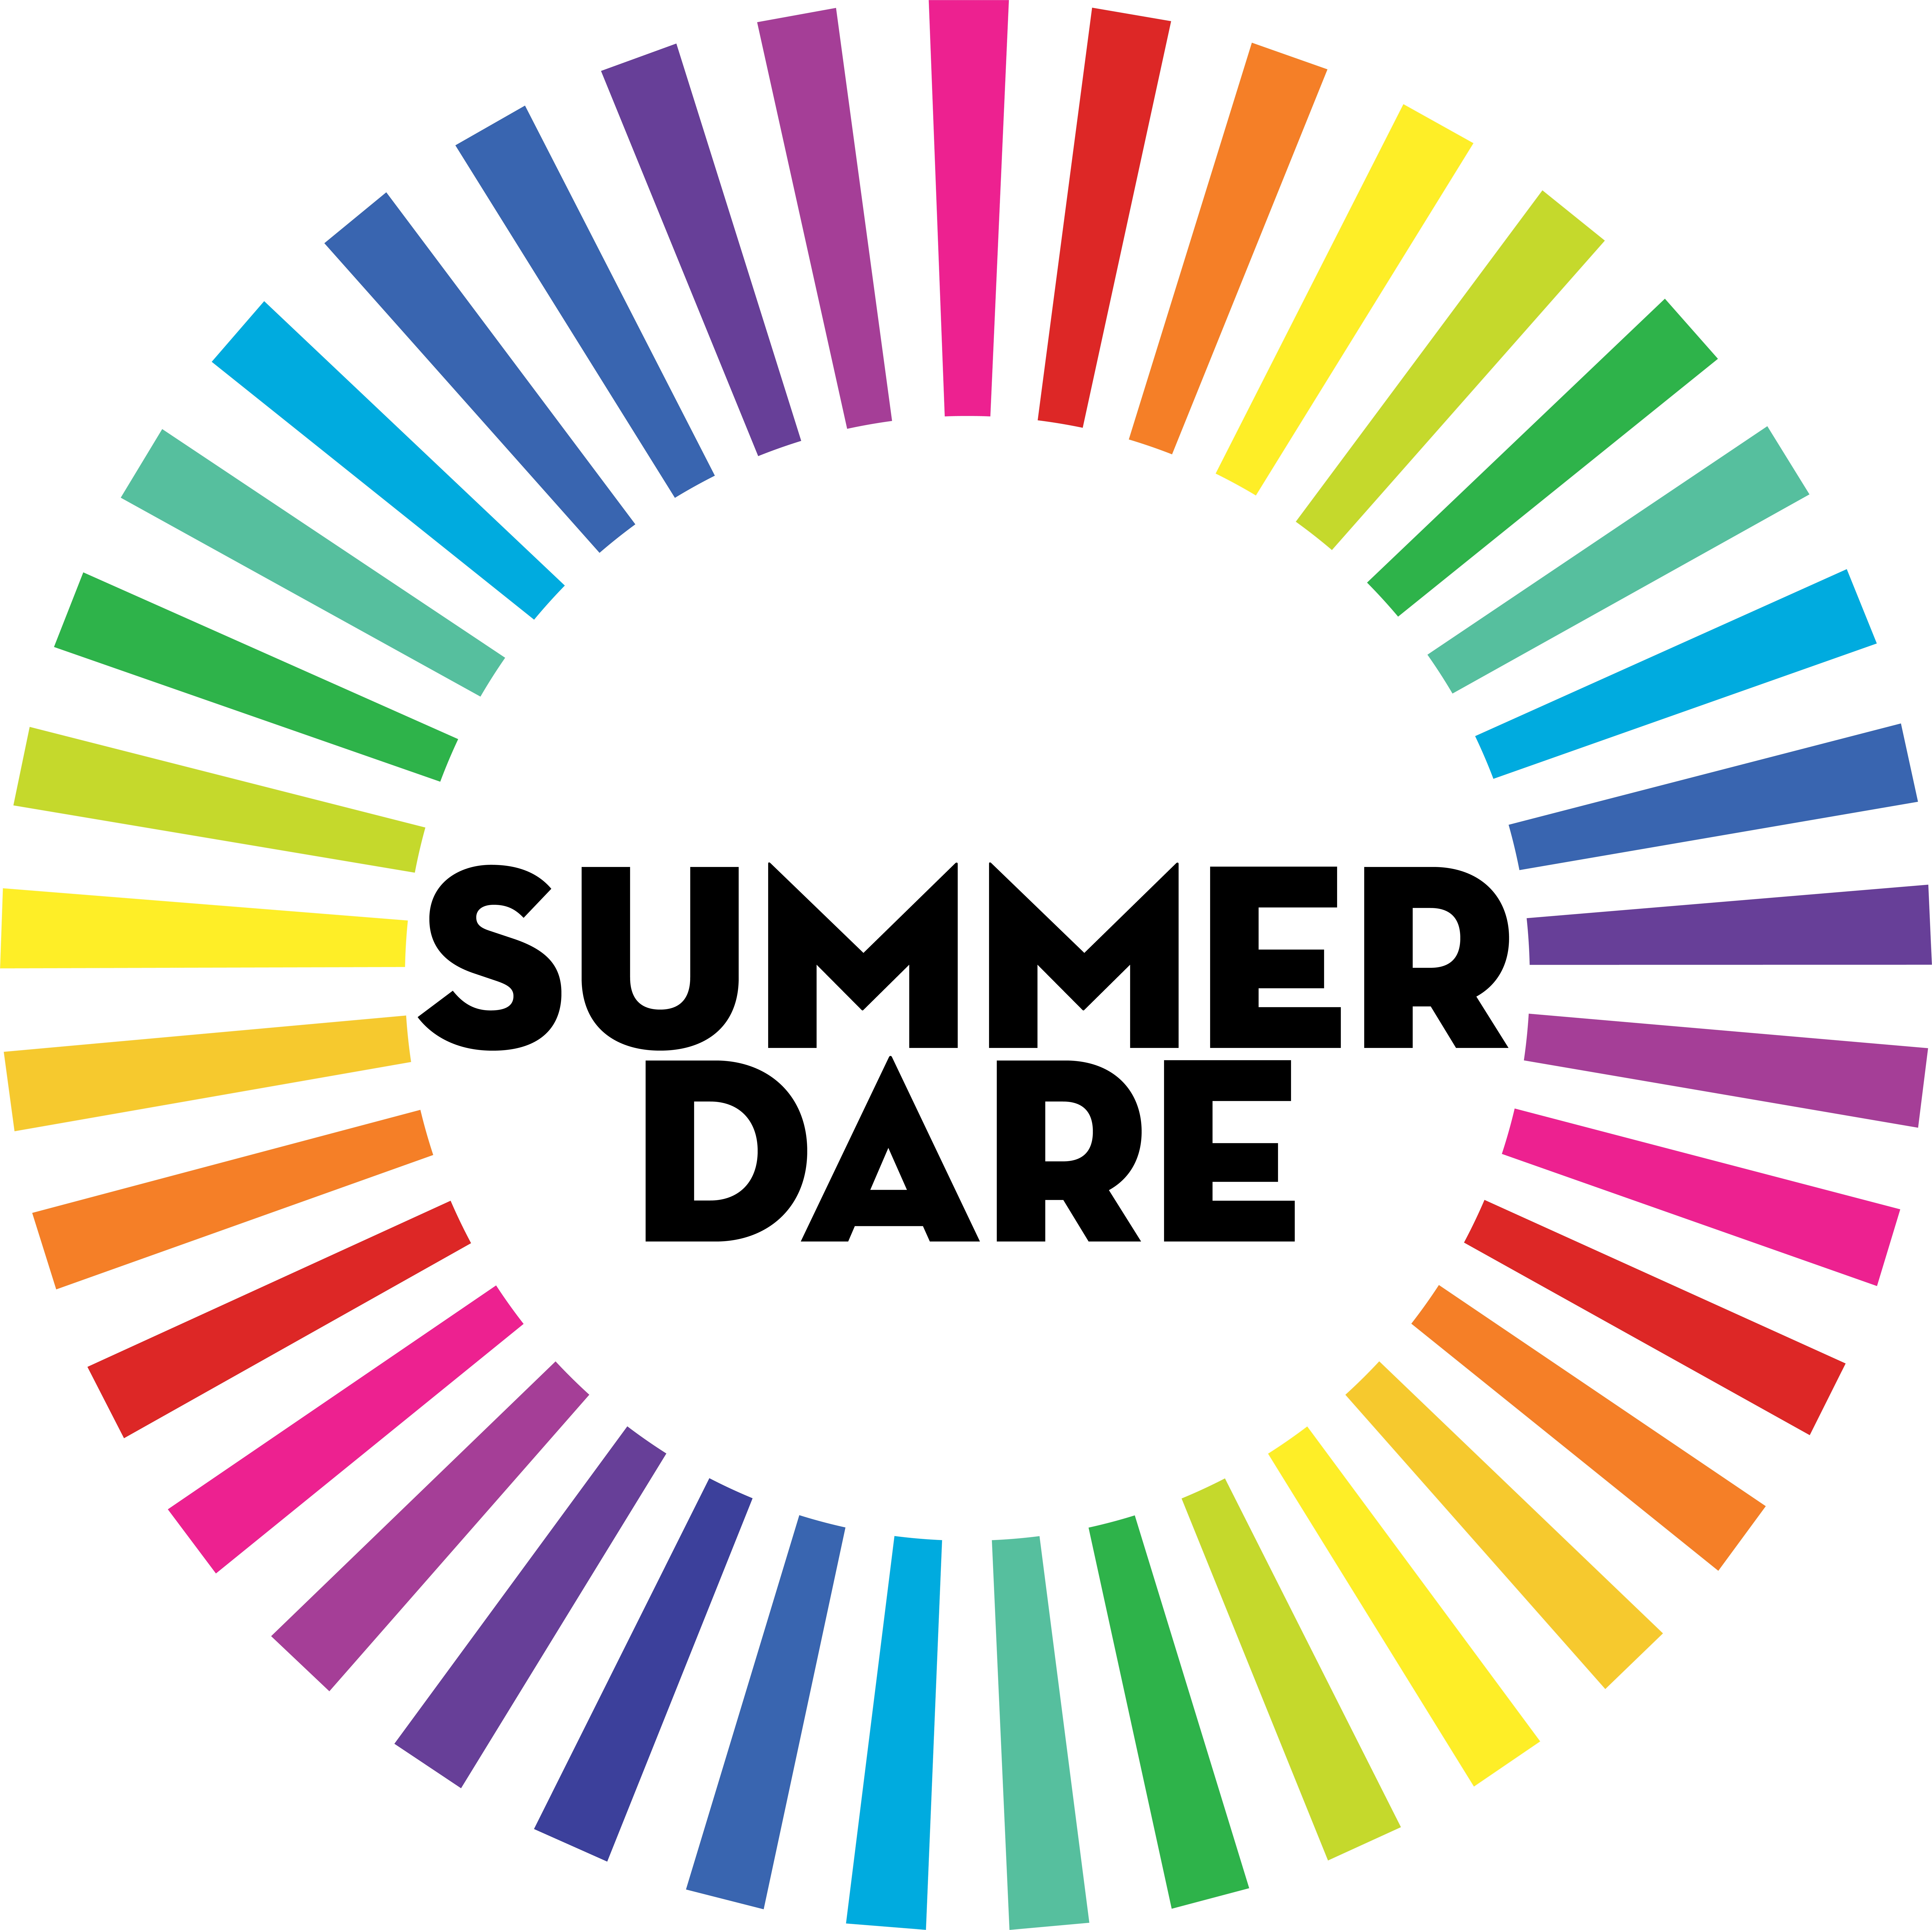 Summer Dare written inside a rainbow-colored wheel.